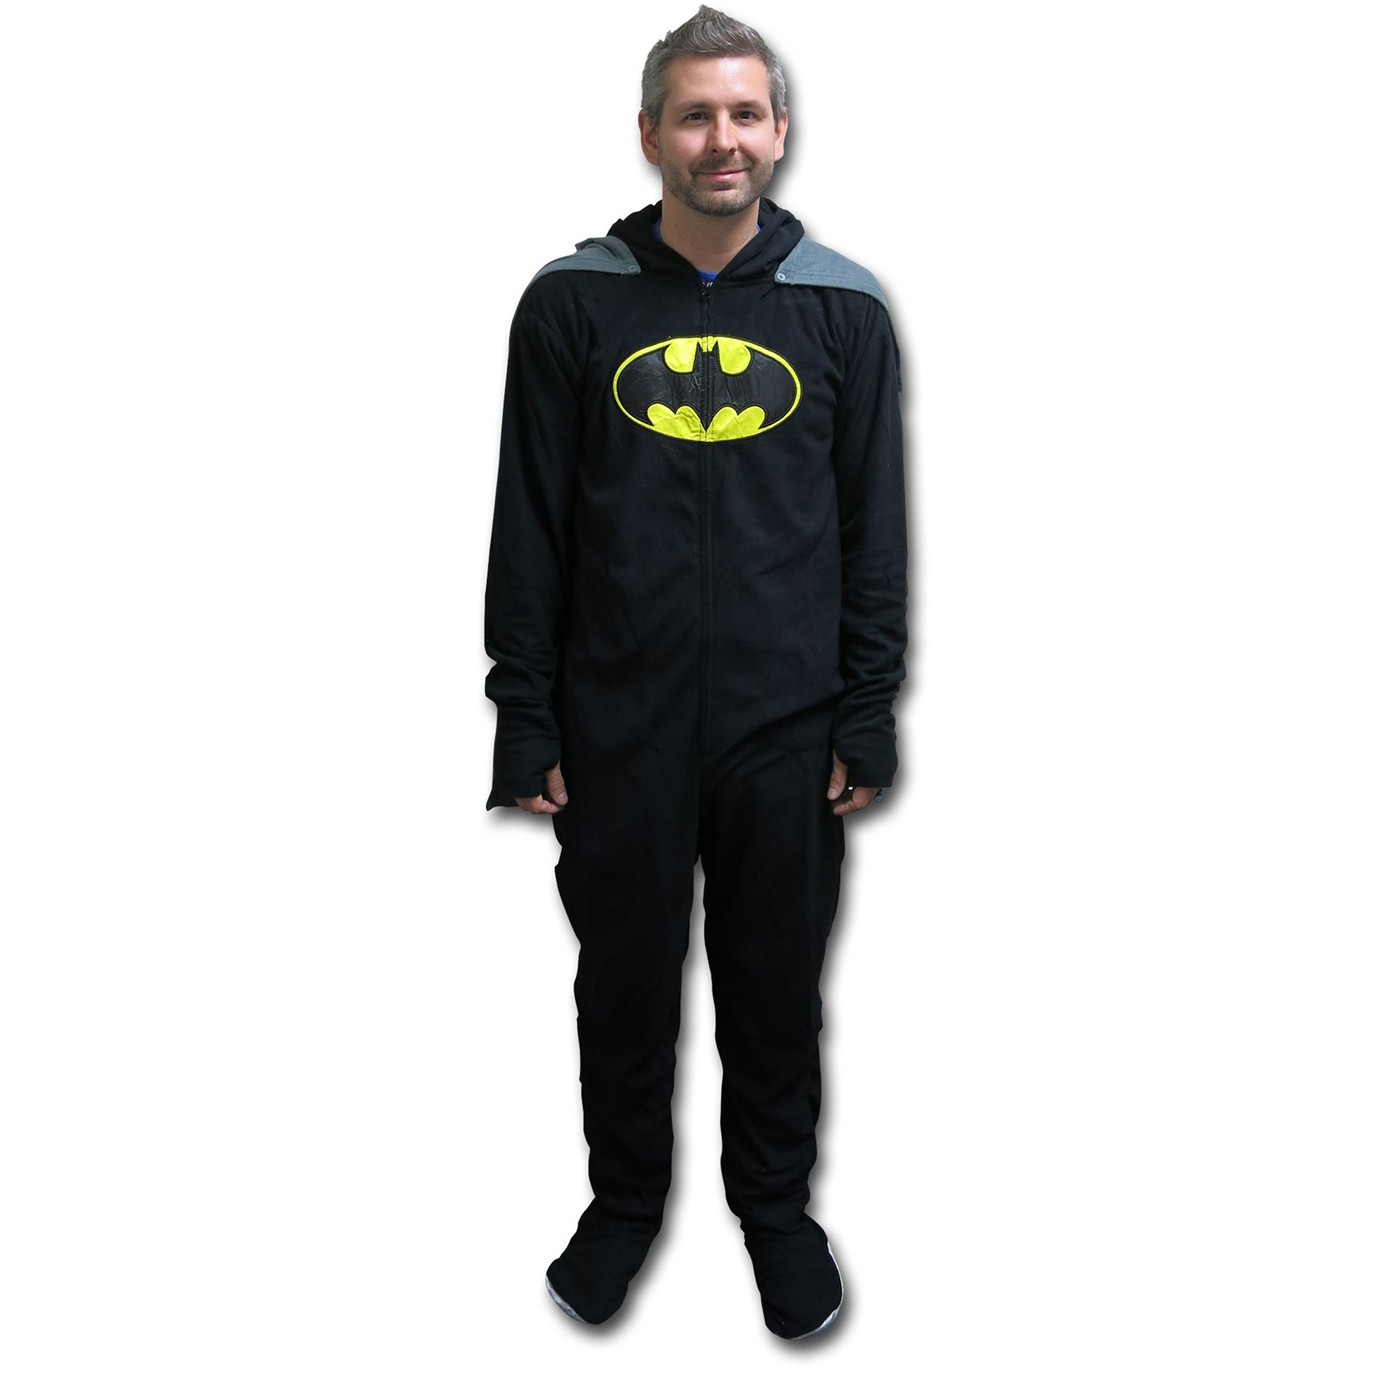 Batman Union Suit Pajamas